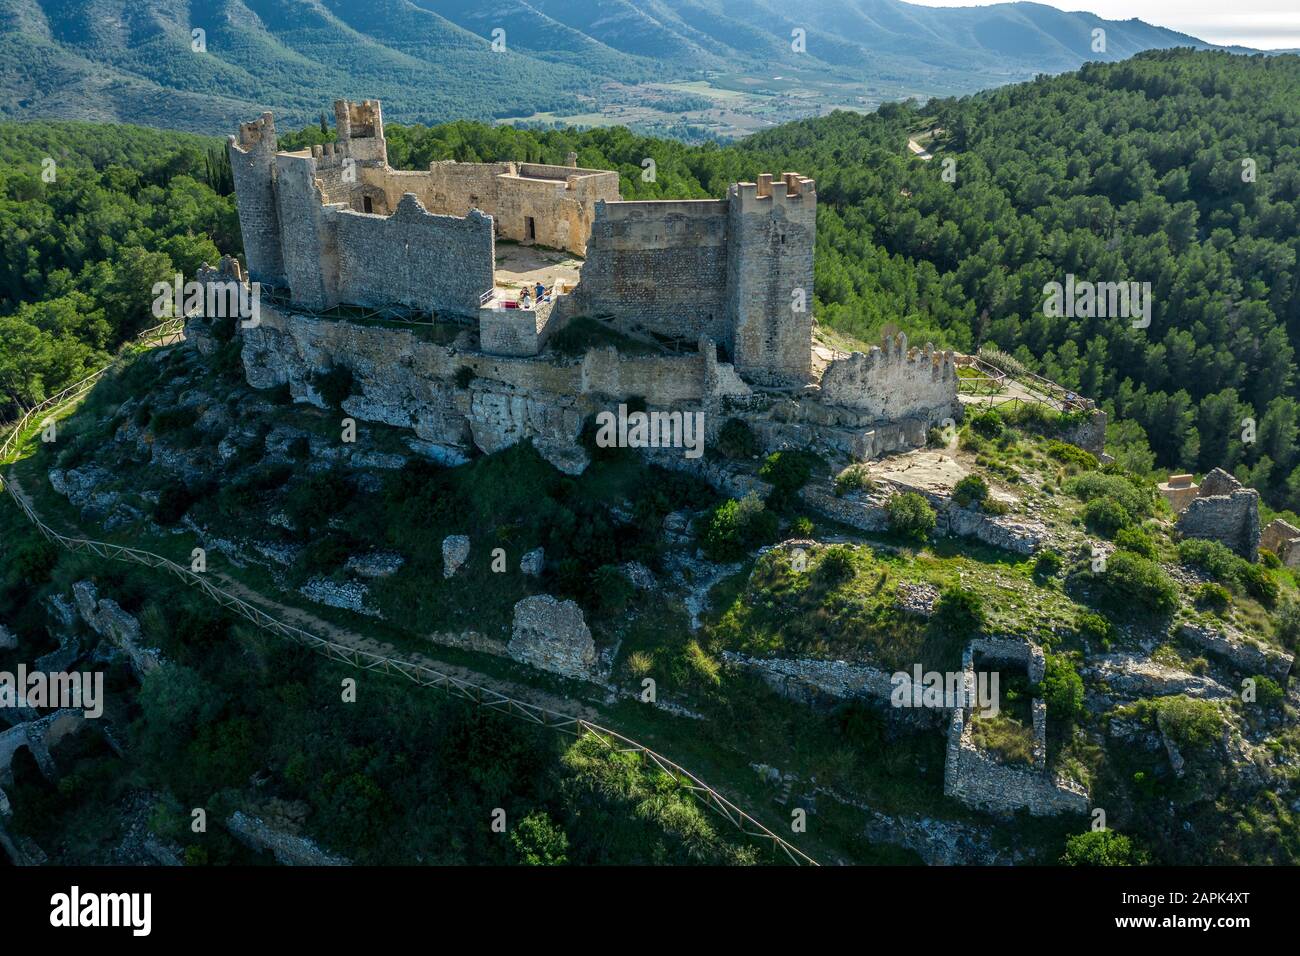 Aerial panorama view of Alcala de Xivert (Alcalá de Chivert) medieval Templar knight castle ruins in Valencia province Spain Stock Photo